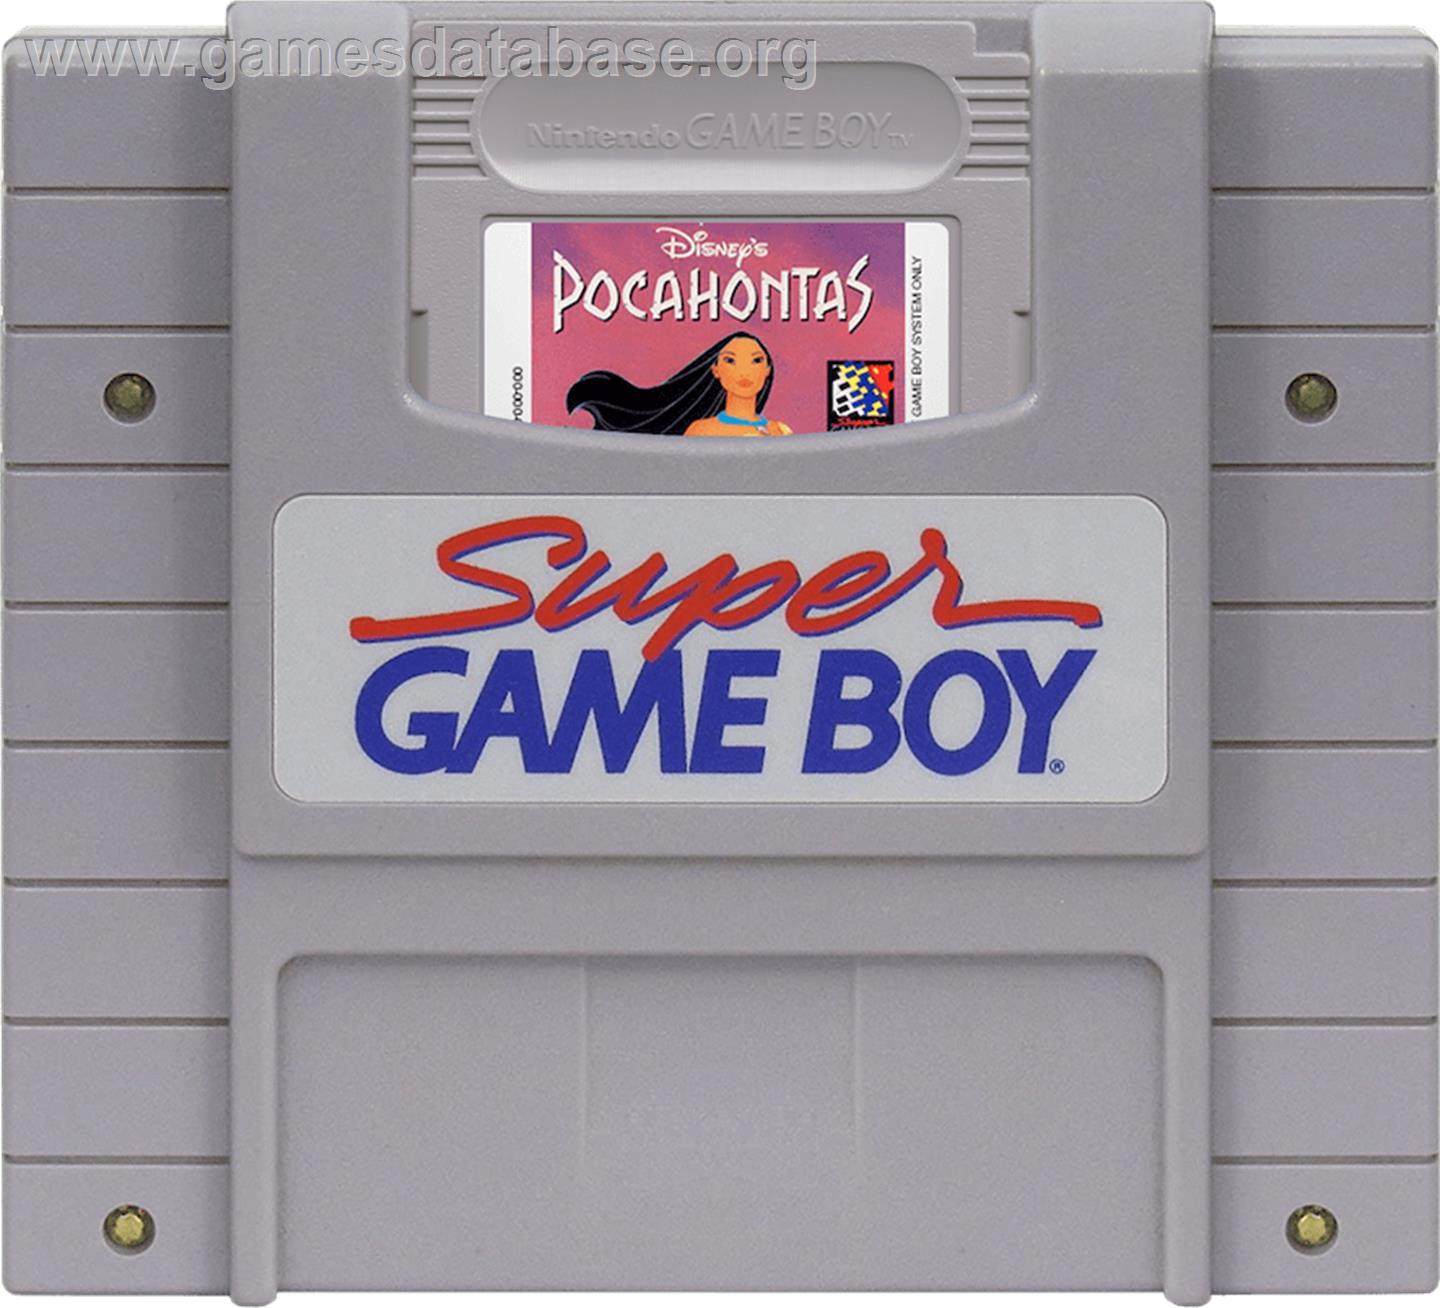 Pocahontas - Nintendo Super Gameboy - Artwork - Cartridge